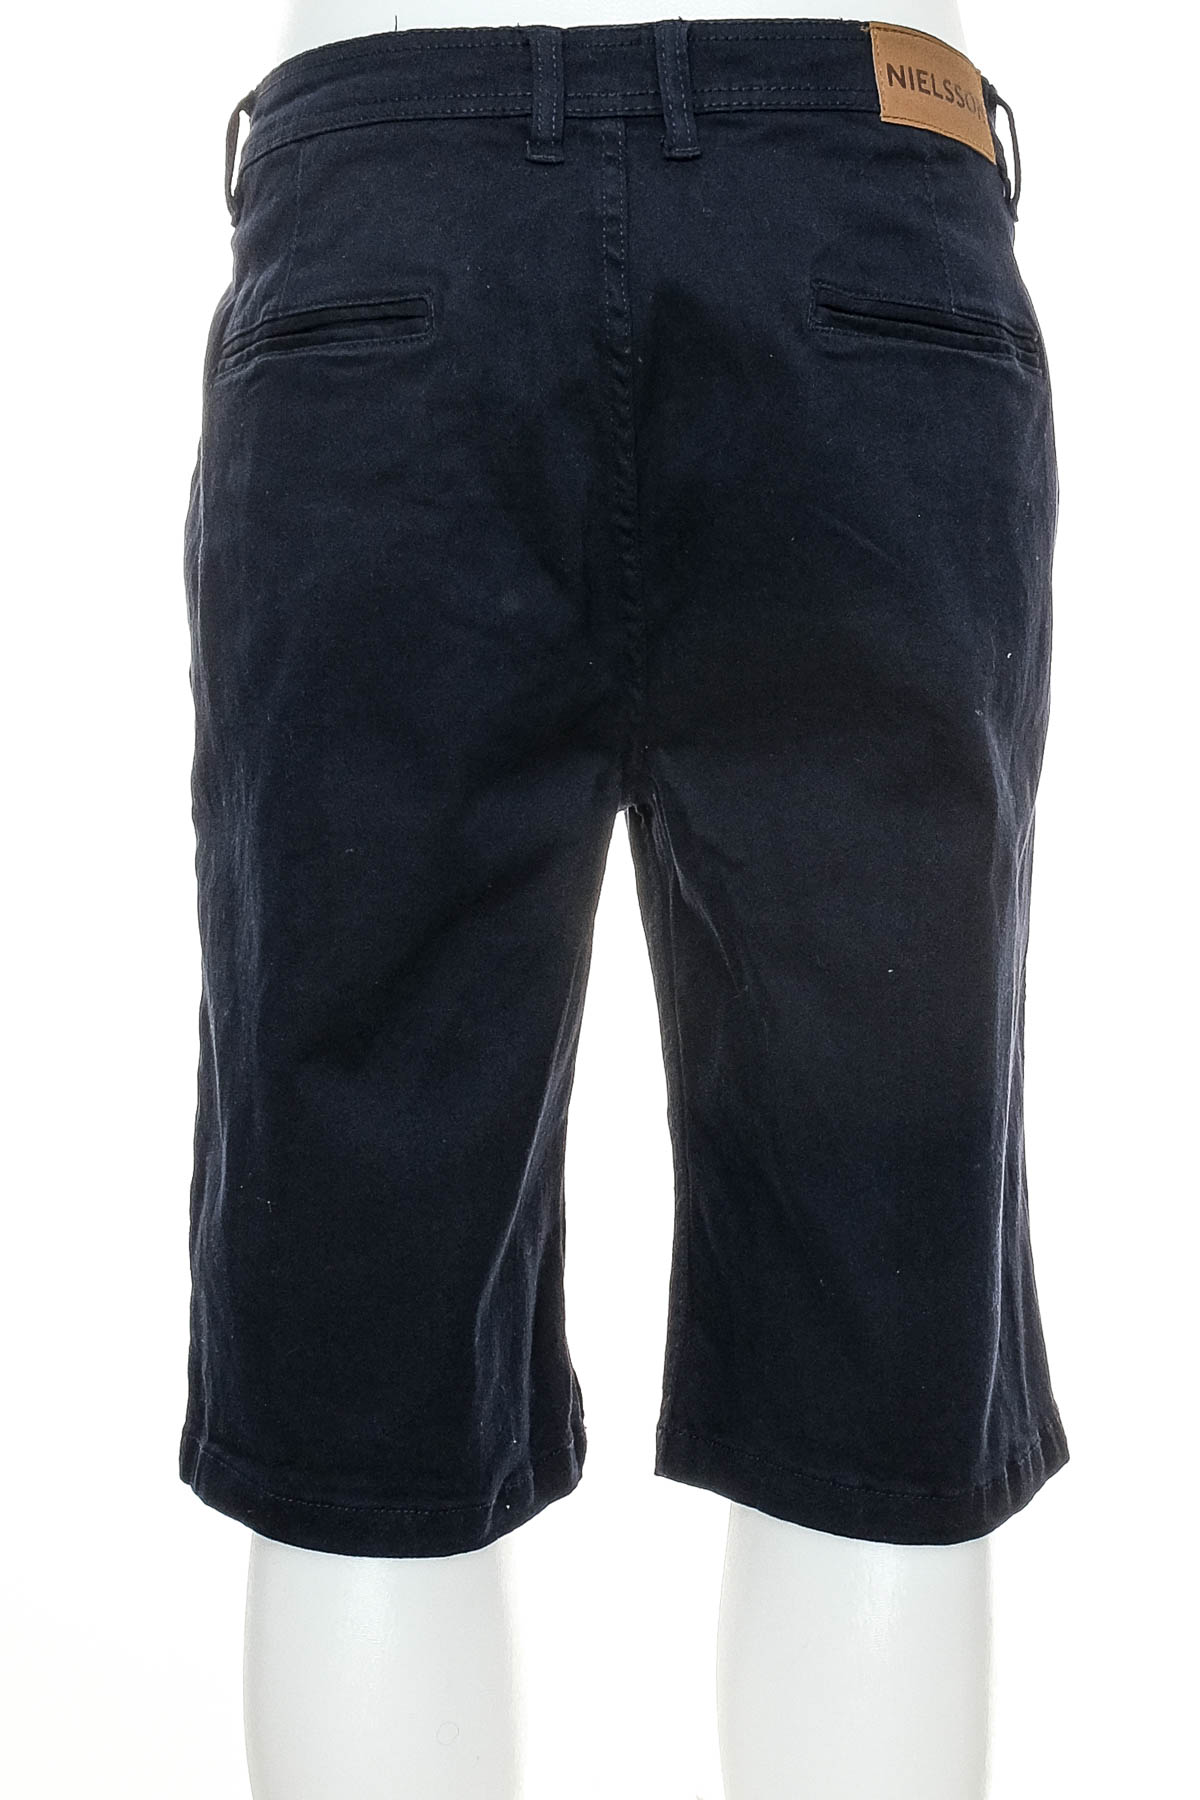 Pantaloni scurți bărbați - Nielsson - 1